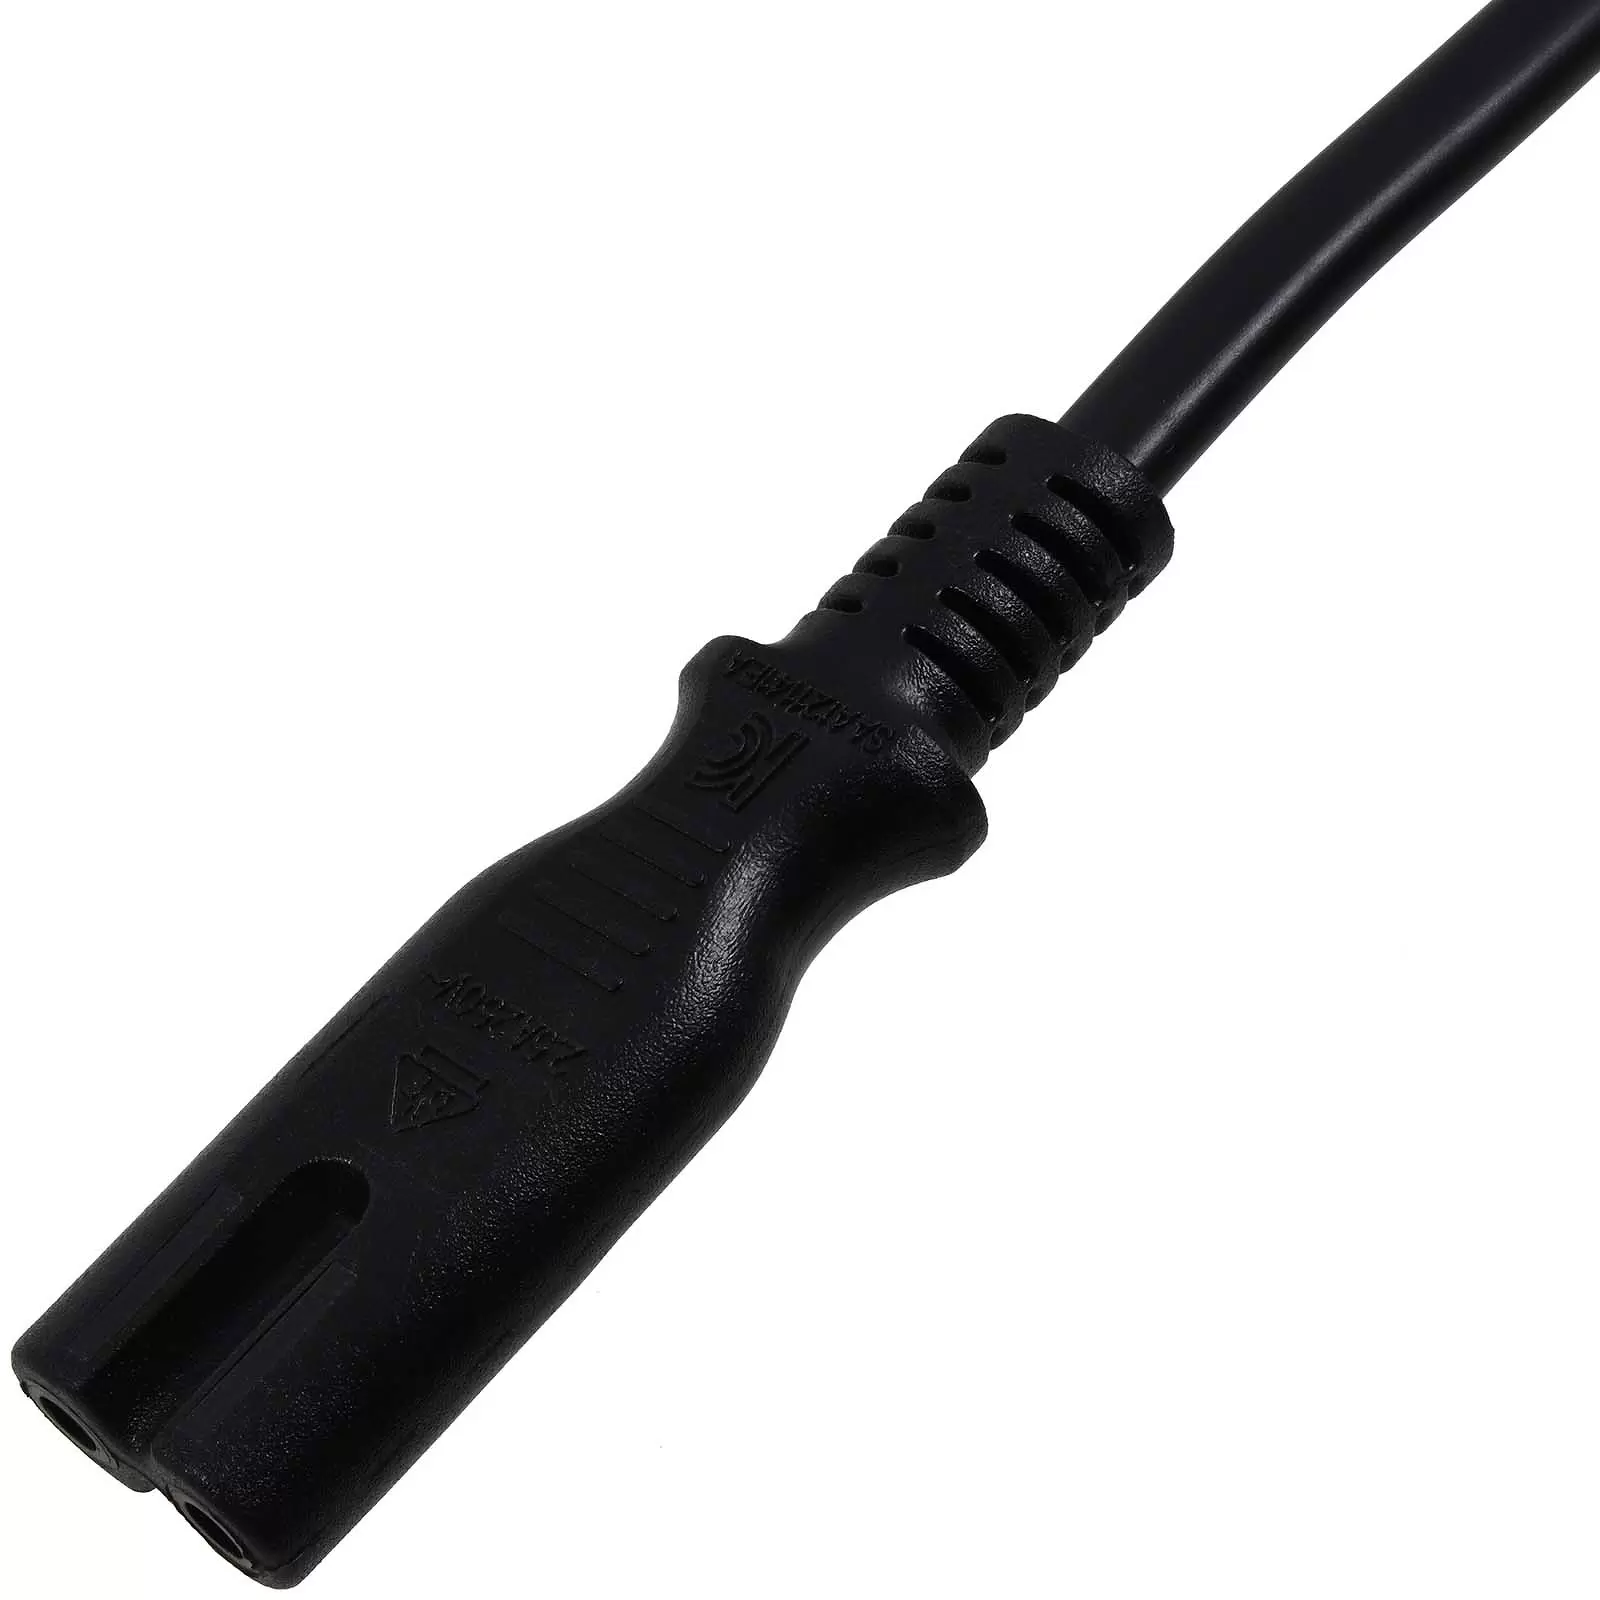 UK 3-pin Anschluss Kabel, UK-Stecker Typ C, 1,8 m Schwarz